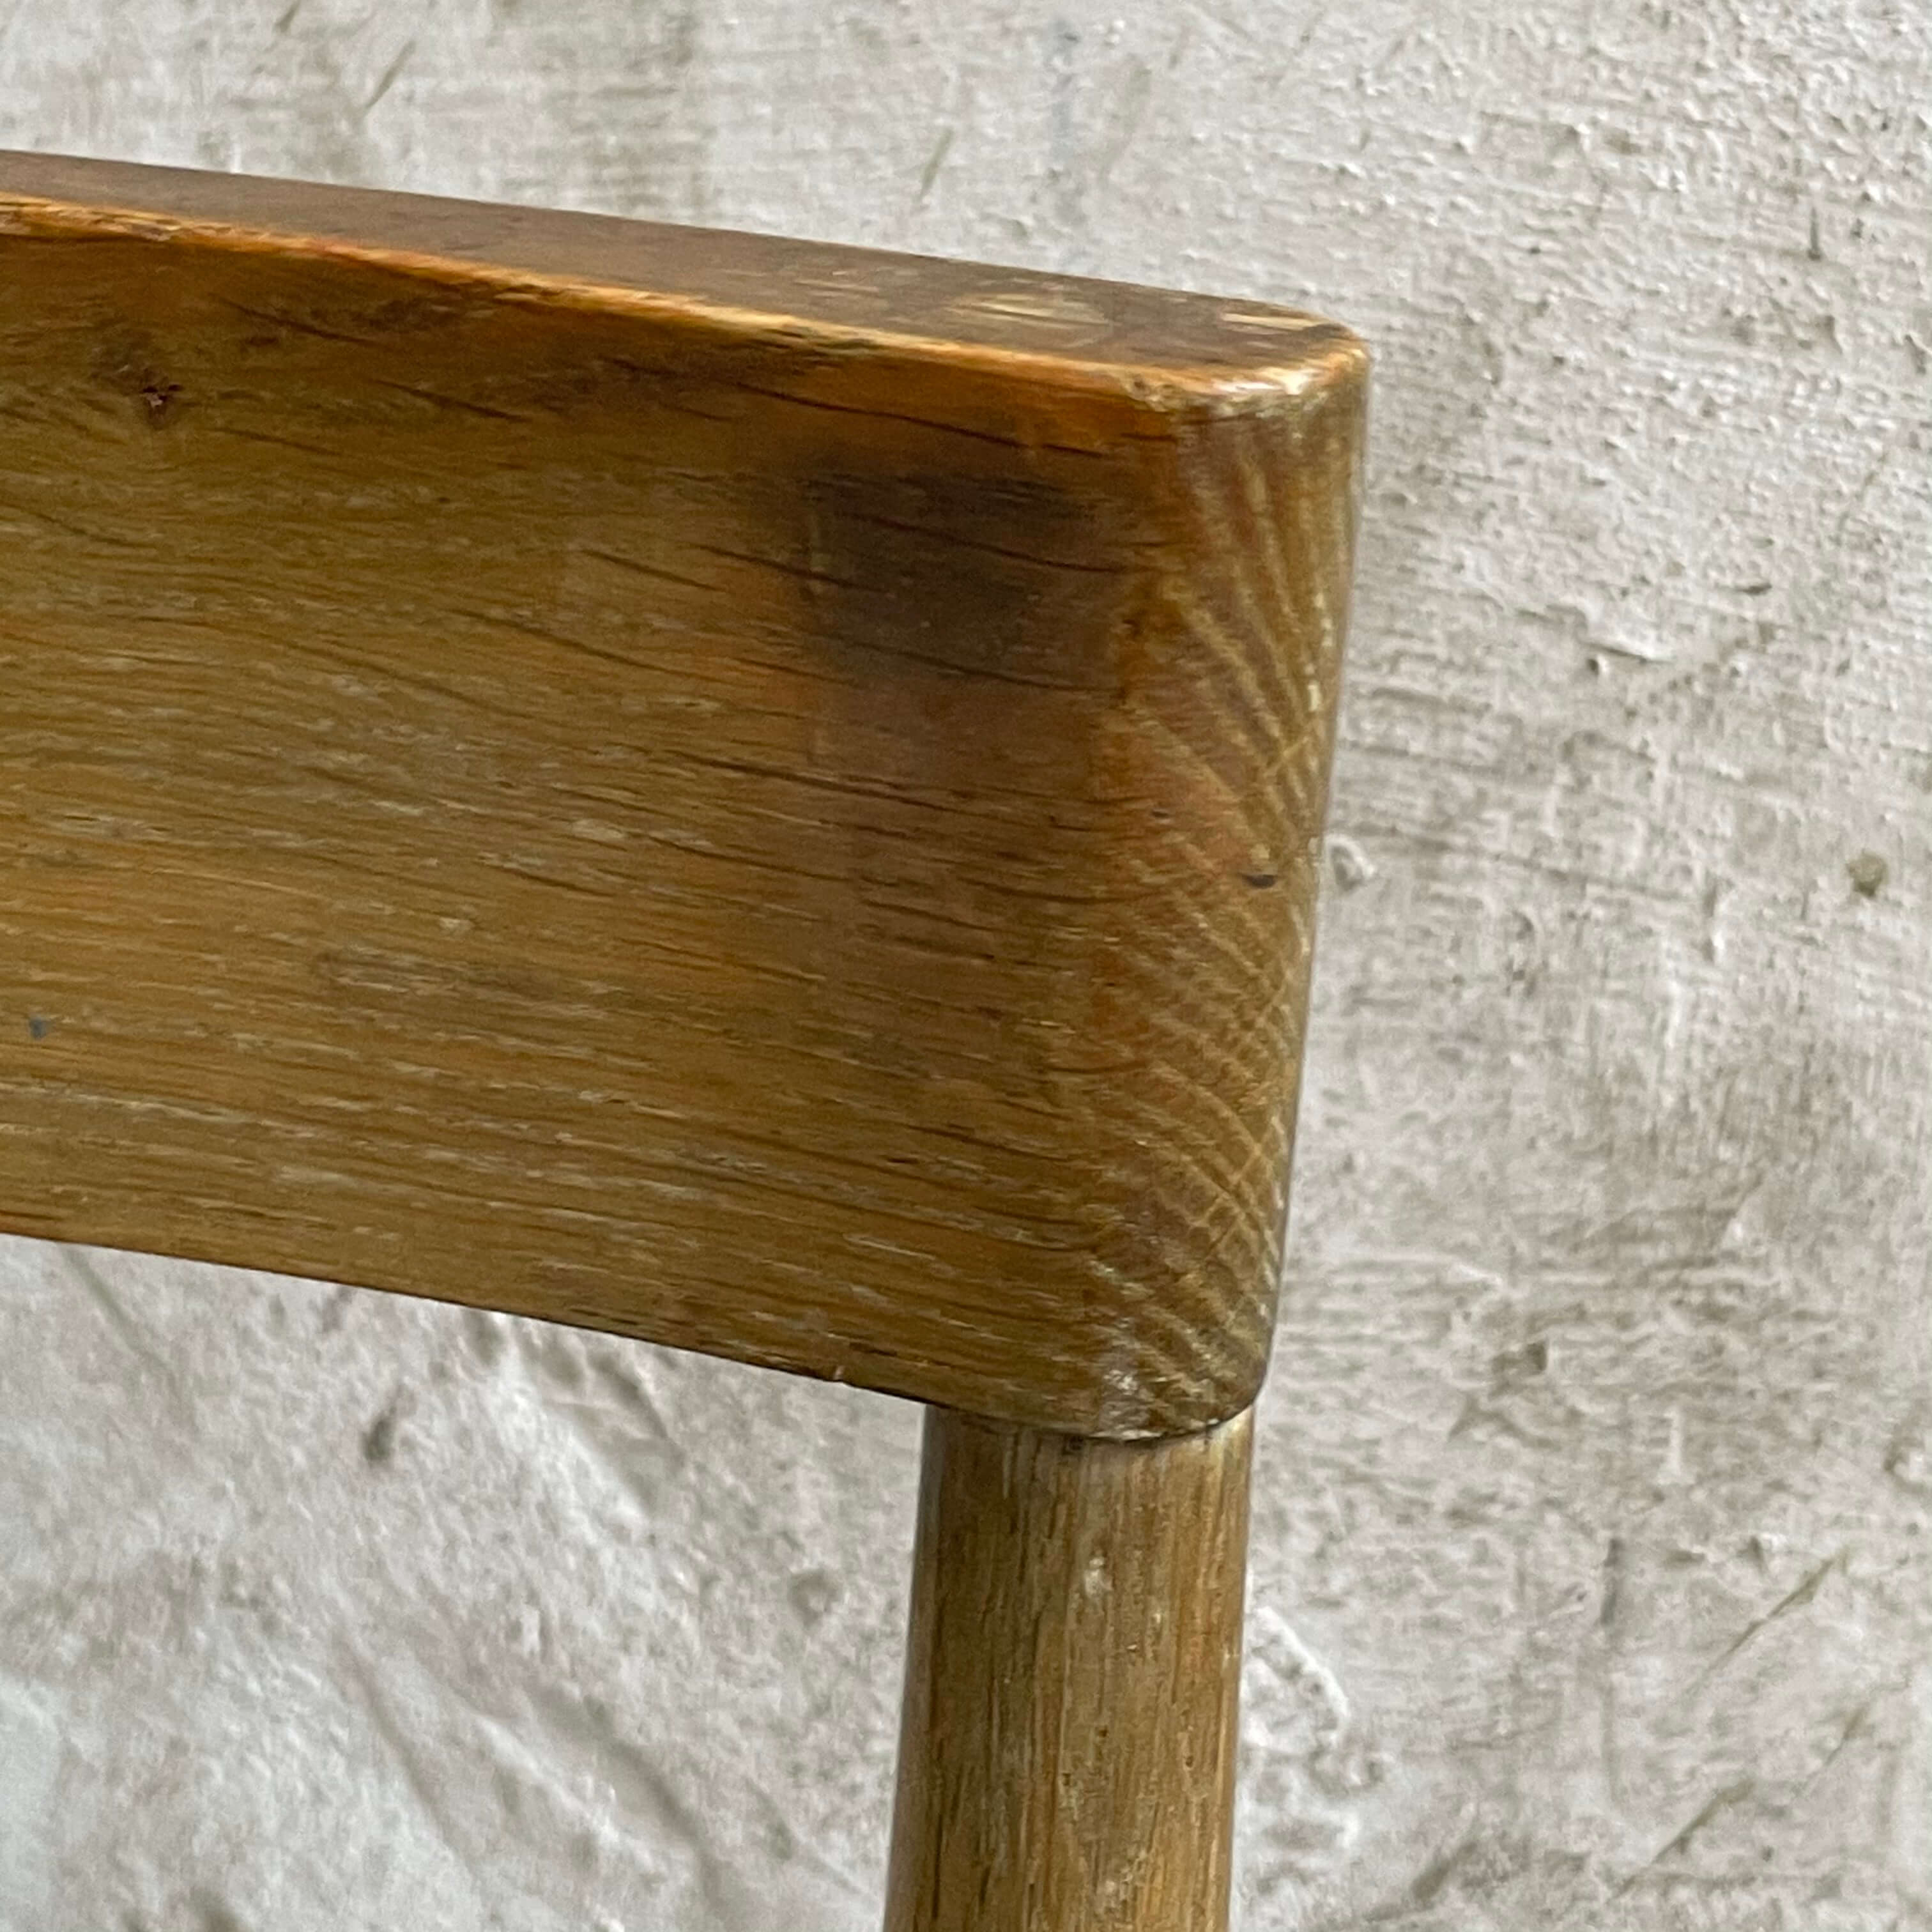 Lubke chairs wood textile vintage german design closeup